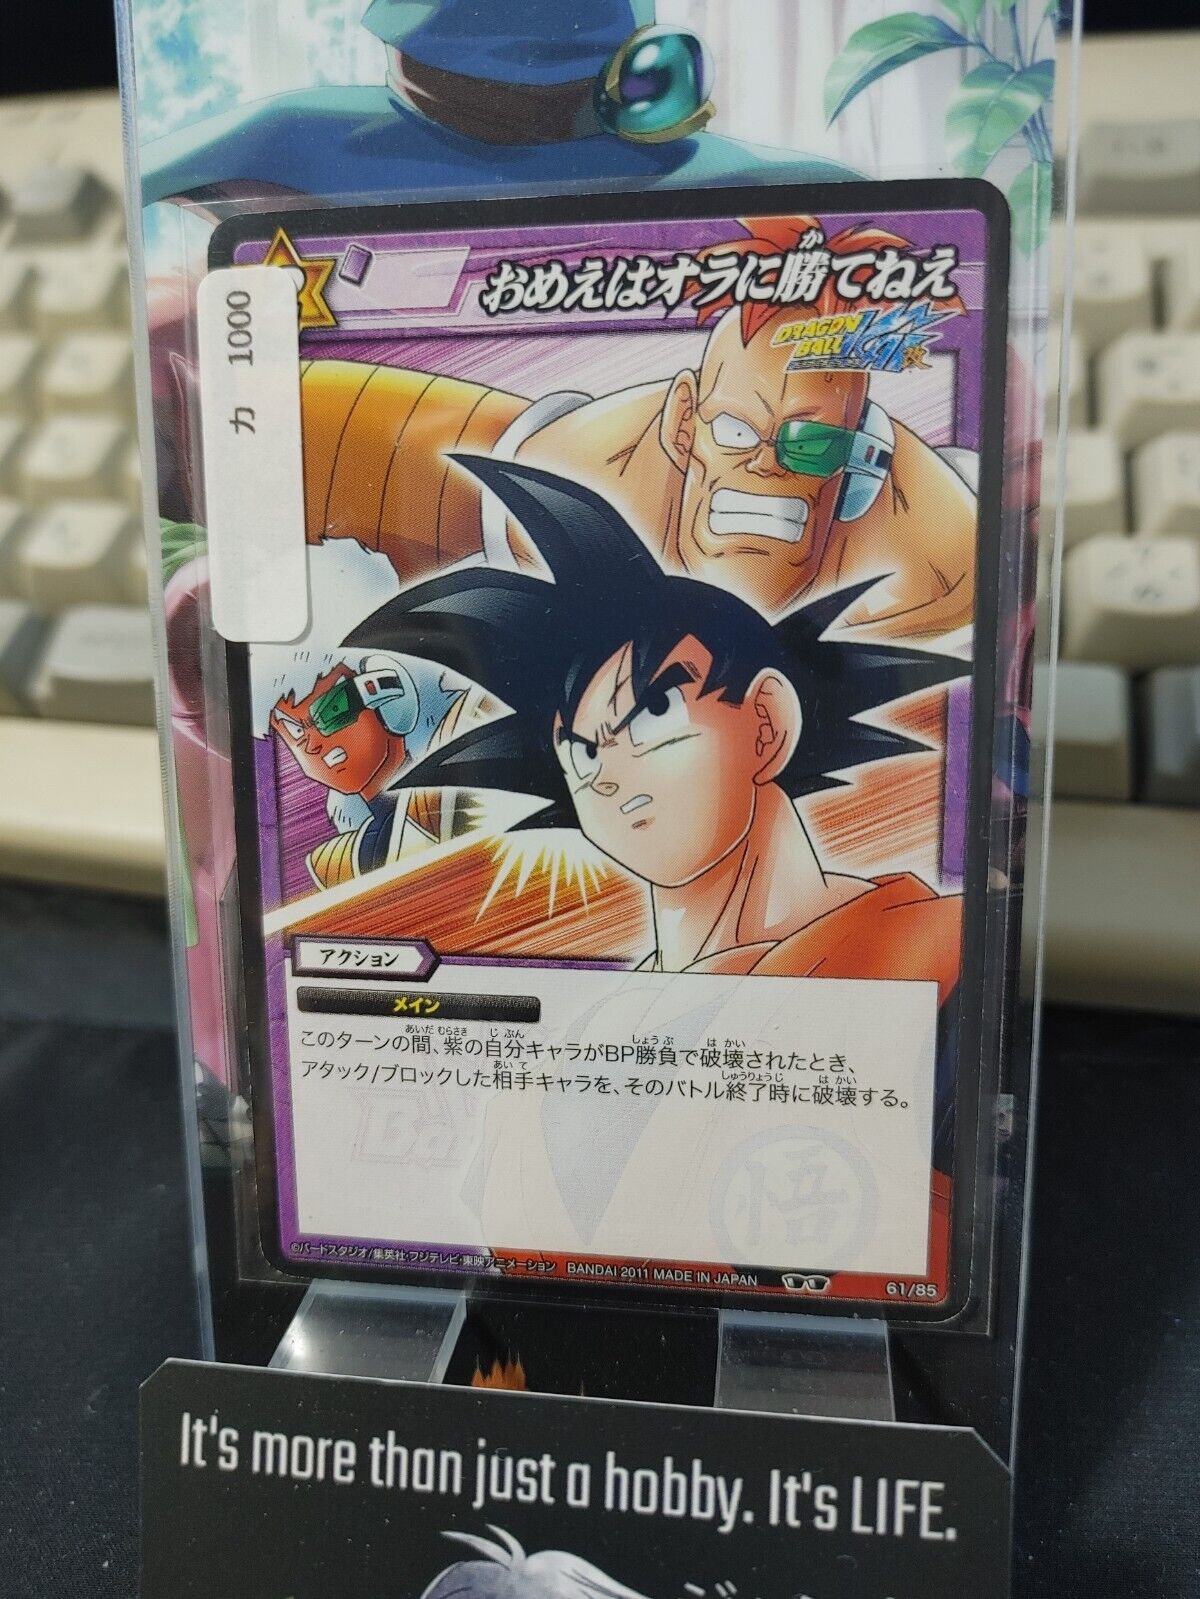 Dragon Ball Z Bandai Carddass Miracle Battle Goku 61/85 Japanese Retro